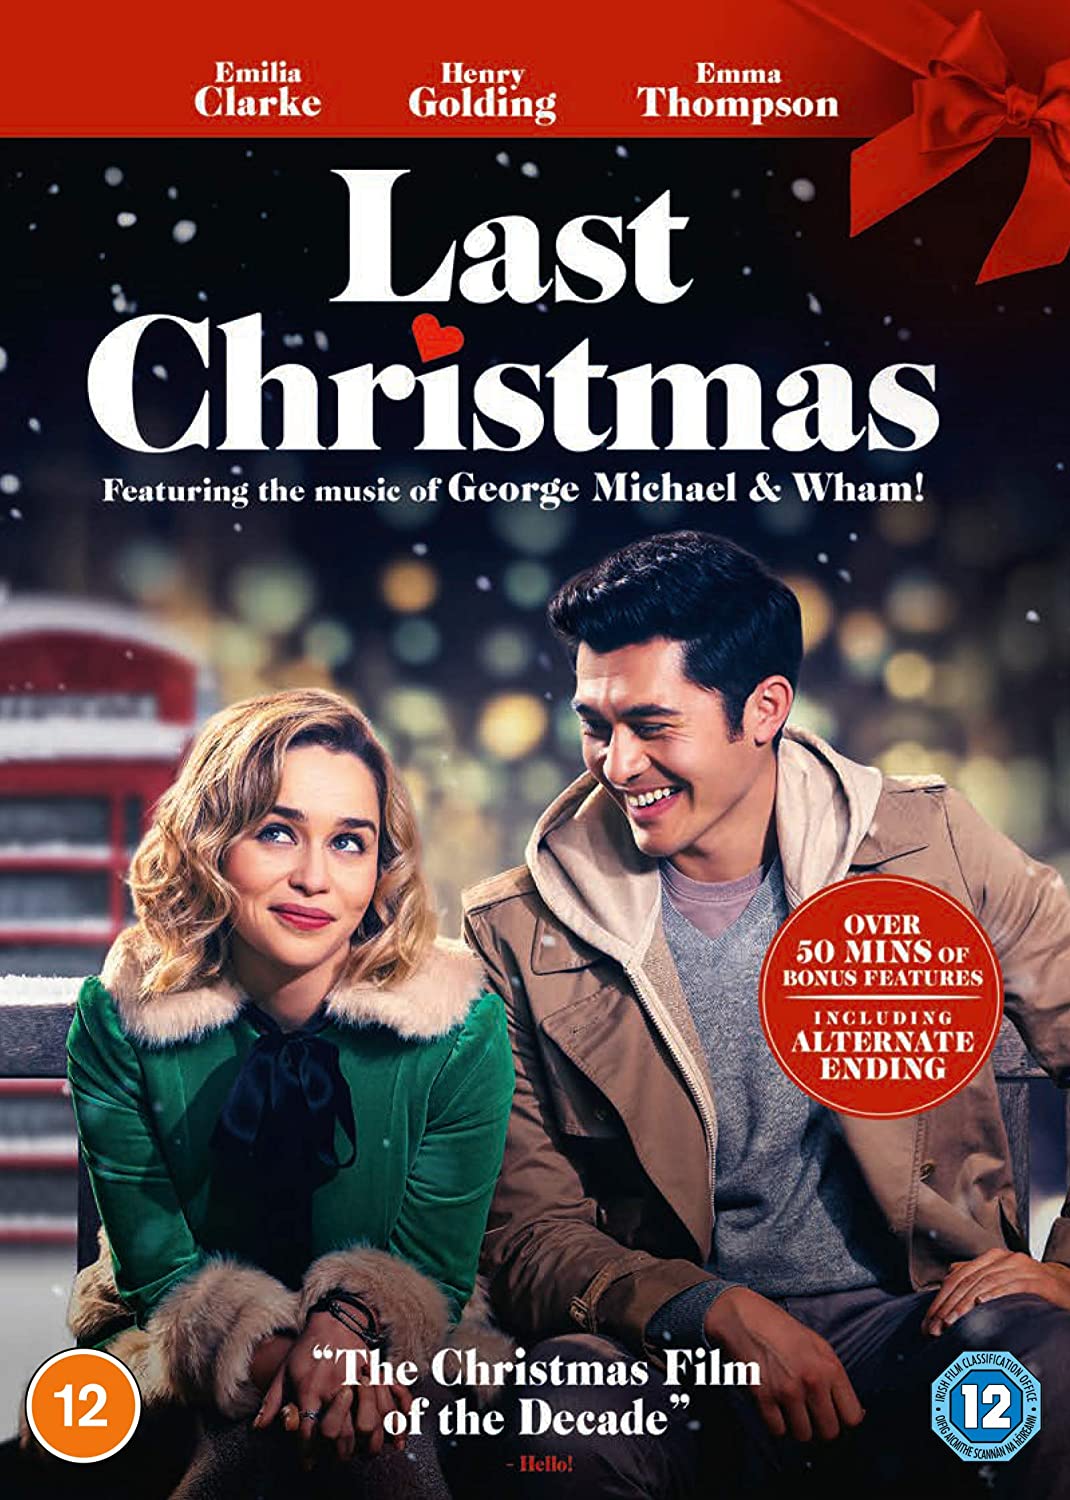 Last Christmas - Romance/Comedy [DVD]